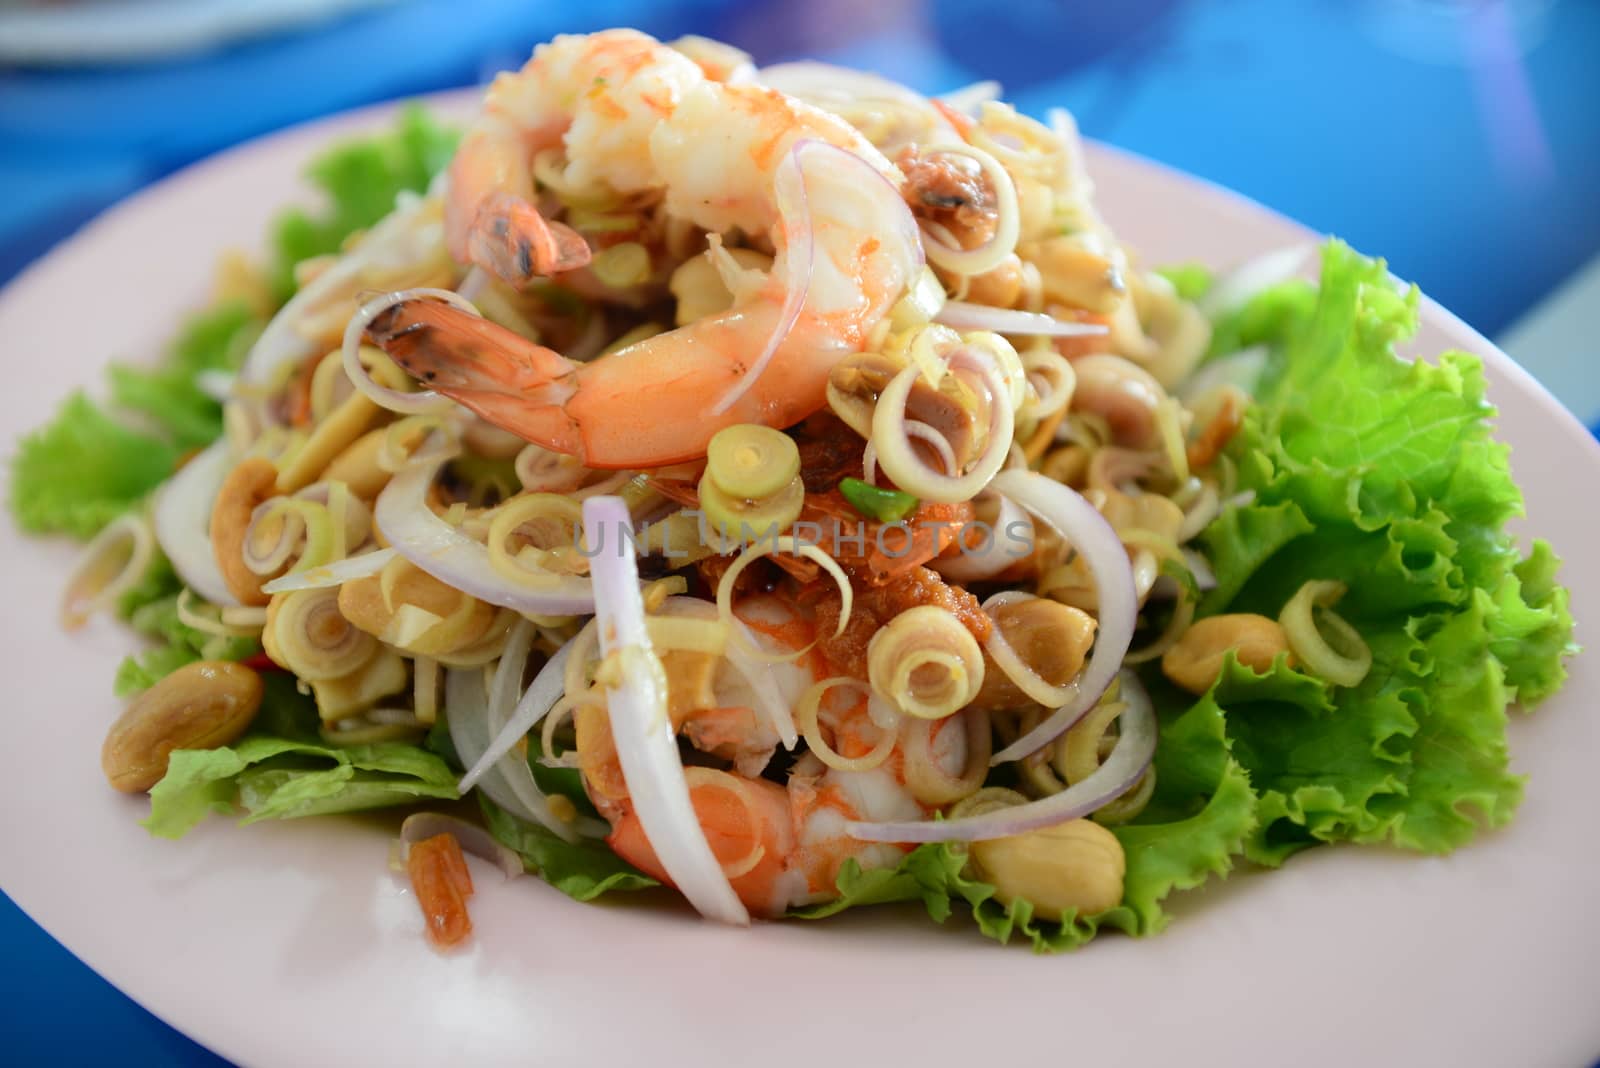 Spicy Lemongrass Salad with Shrimps, Thai food